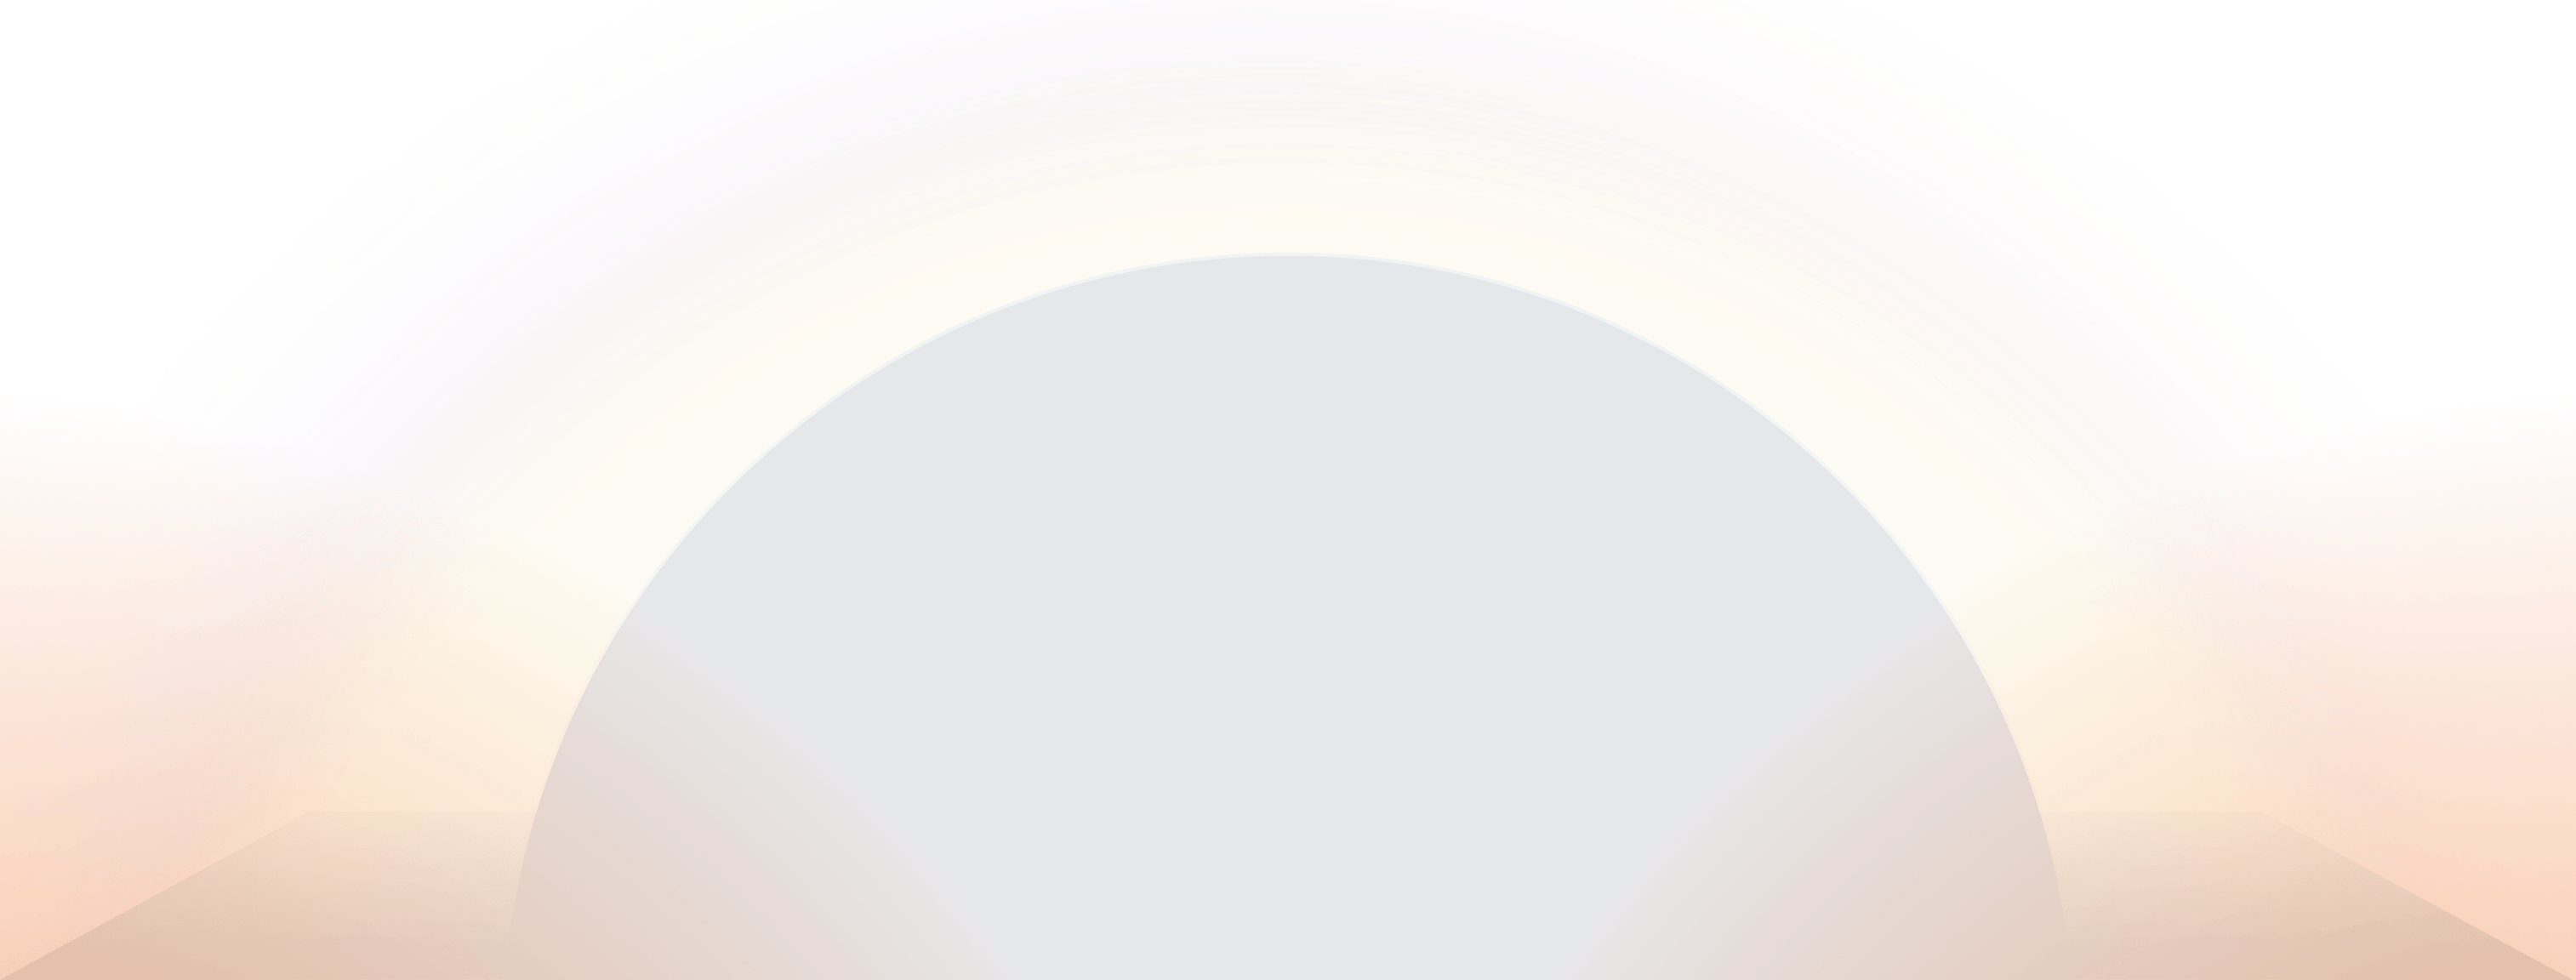 A glowing, planet-like orb peeking over a horizon.